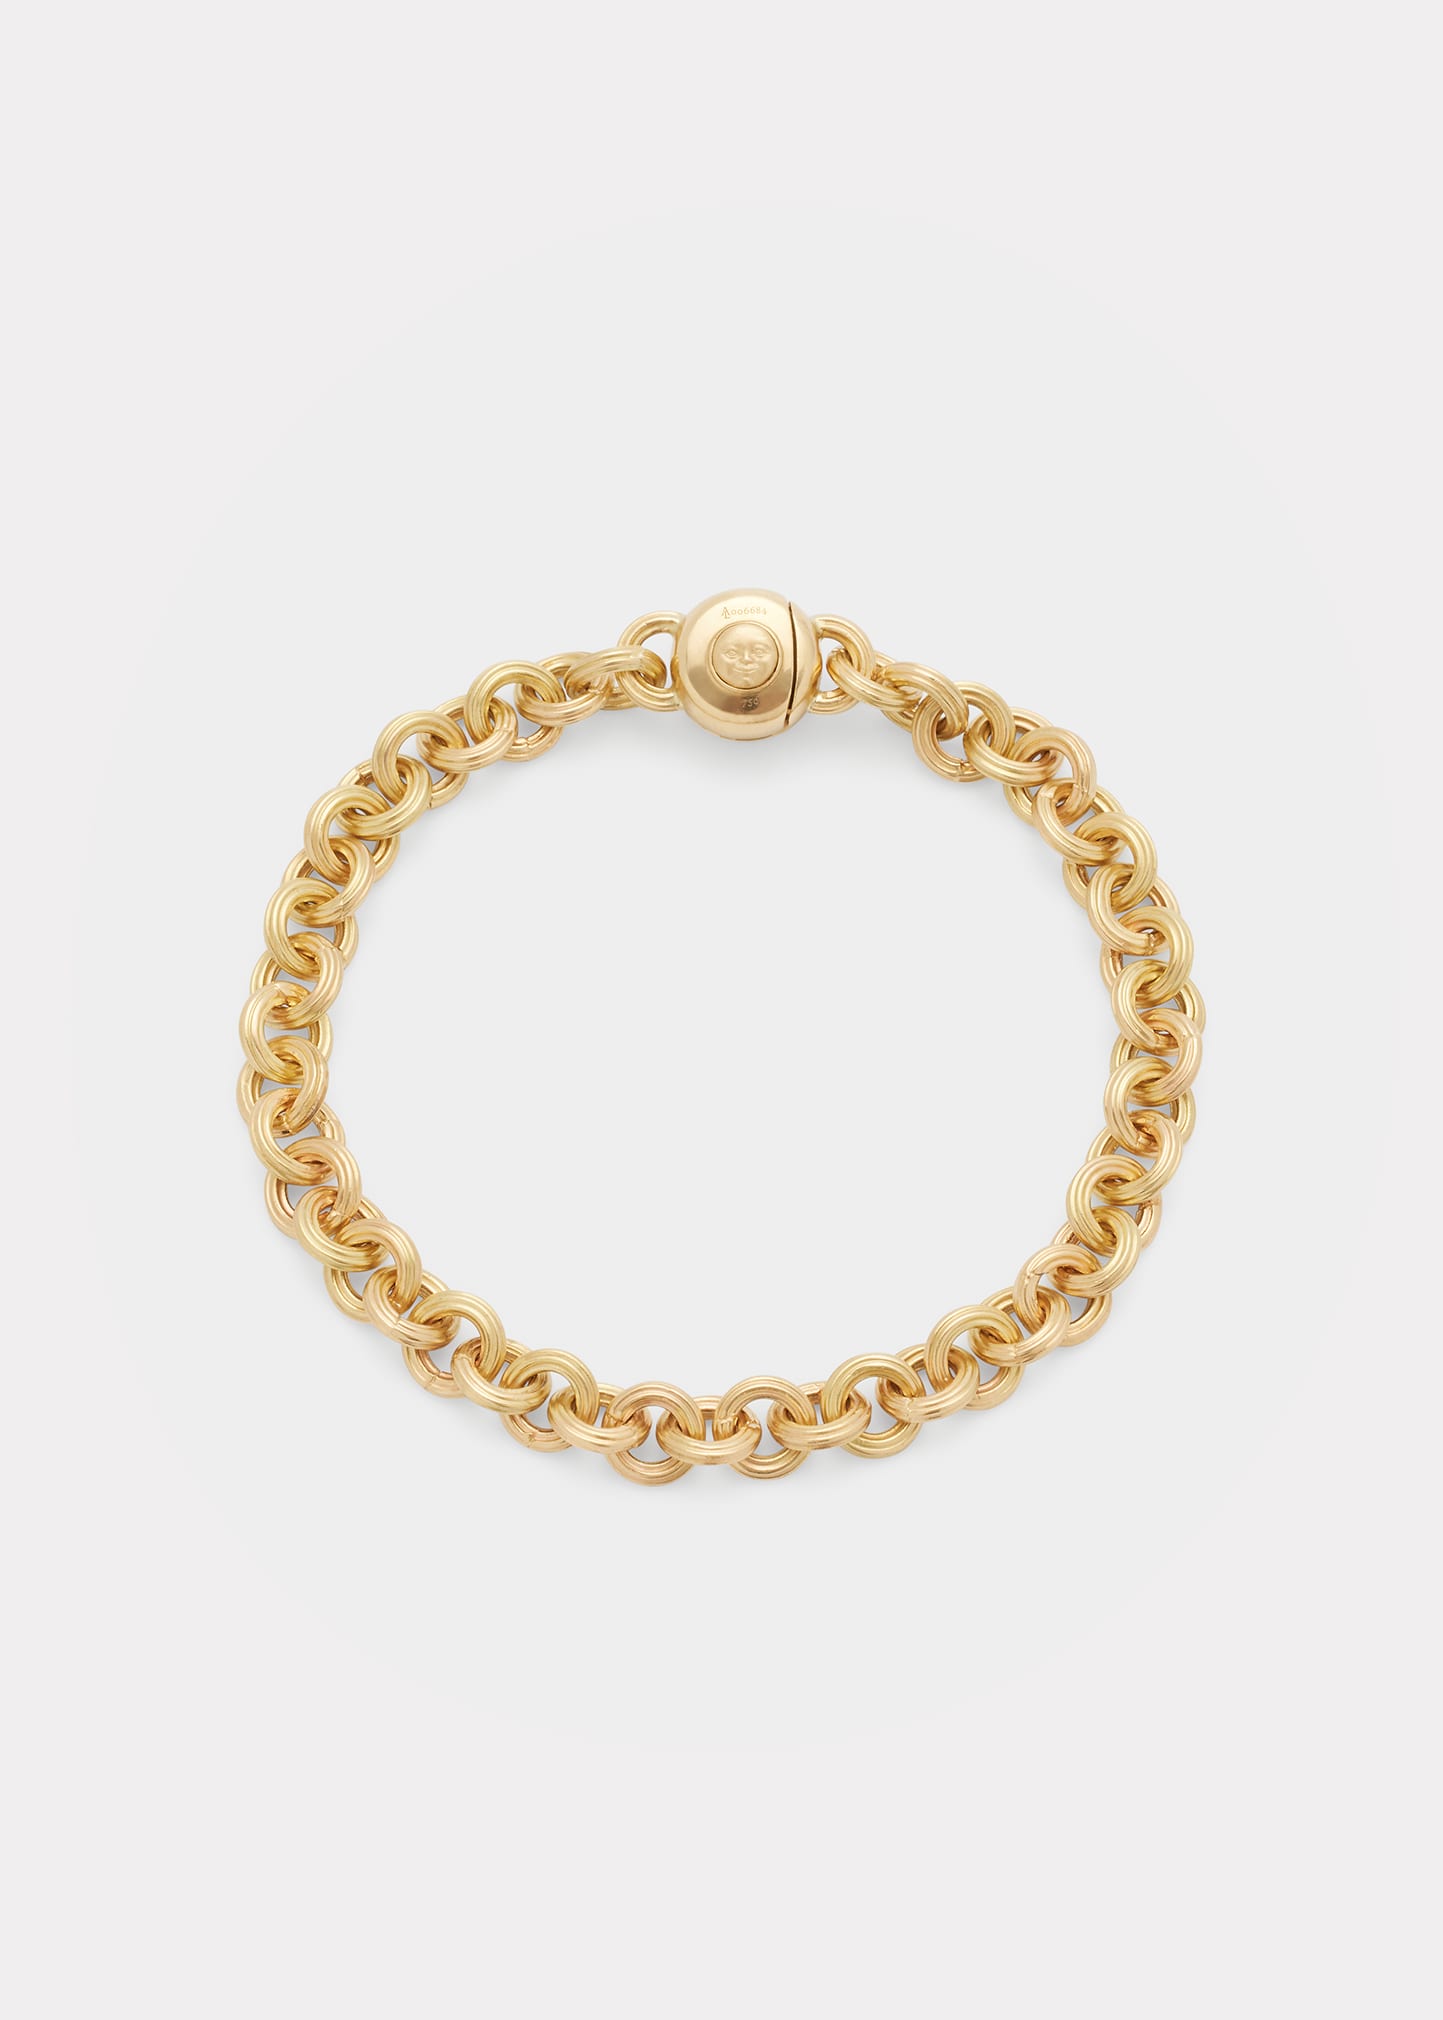 Moon Chain Bracelet in 18k Gold with Diamonds